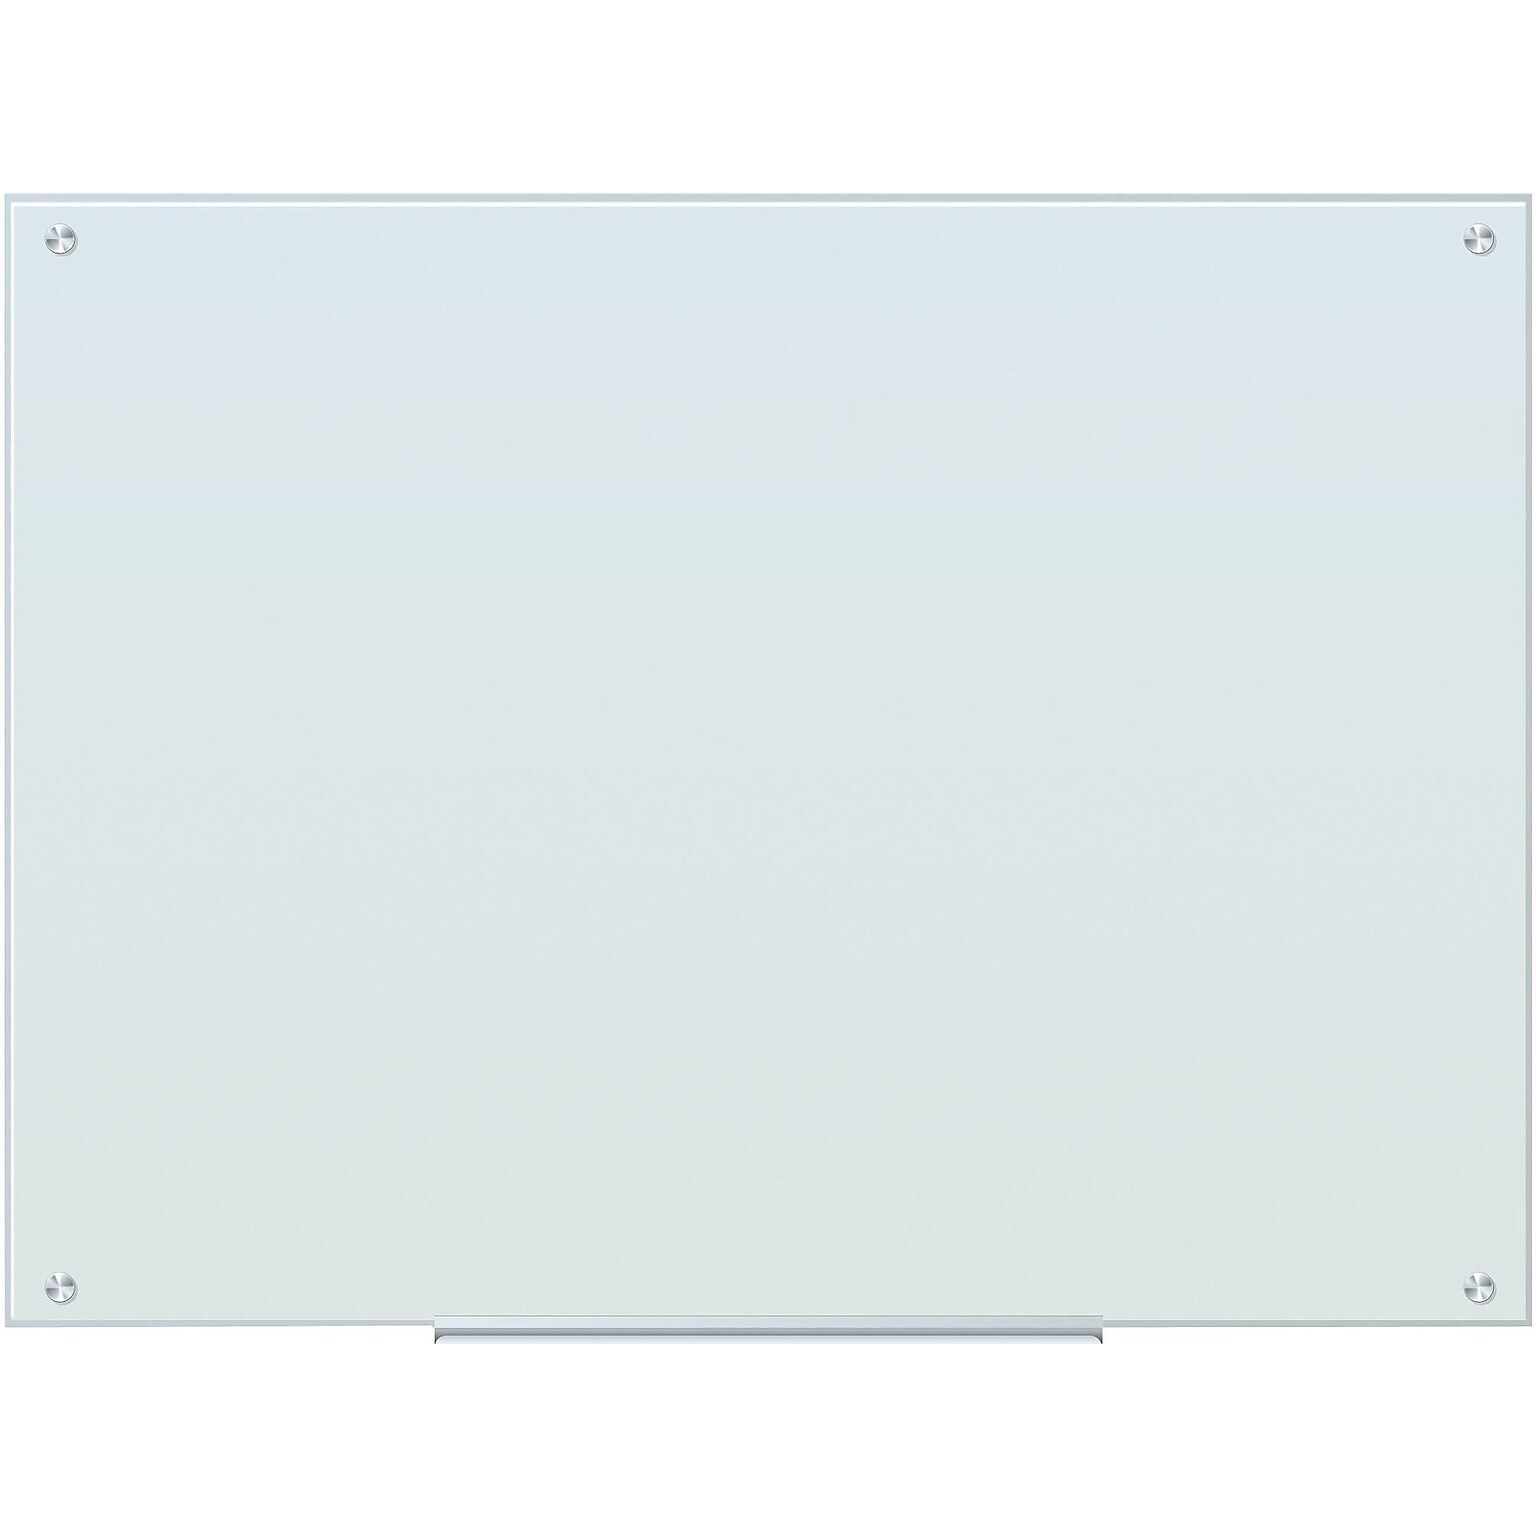 U Brands Glass Dry-Erase Whiteboard, 3 x 4 (121U00-01)